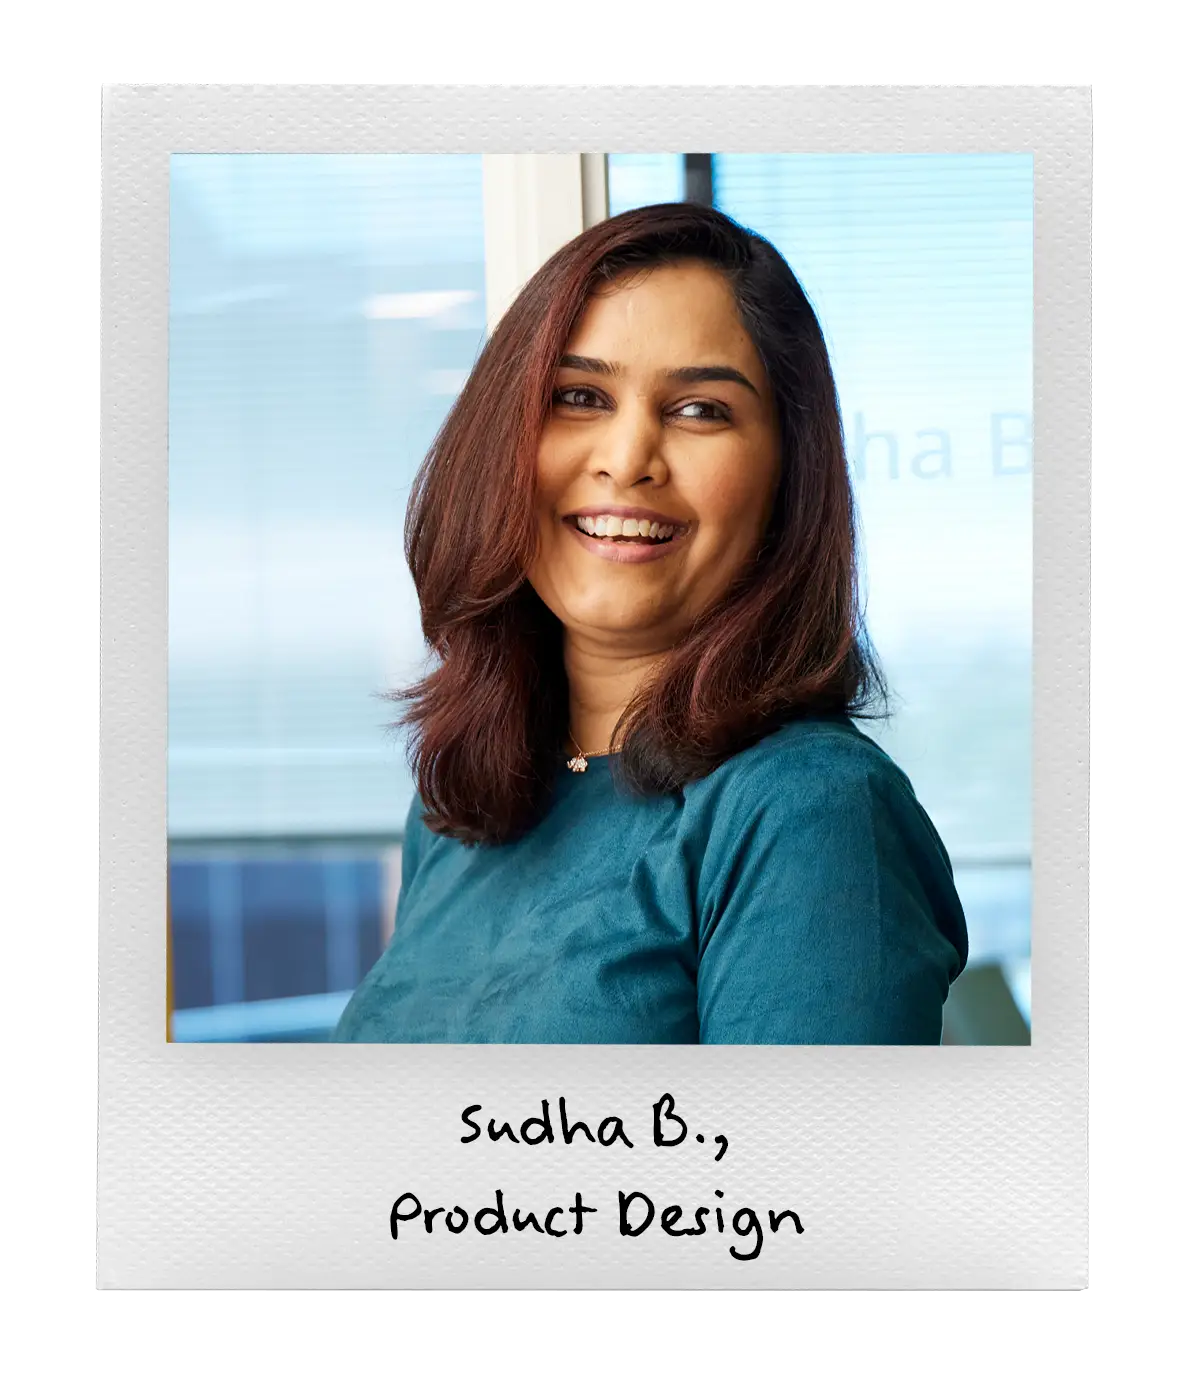 Sudha B., Product Design